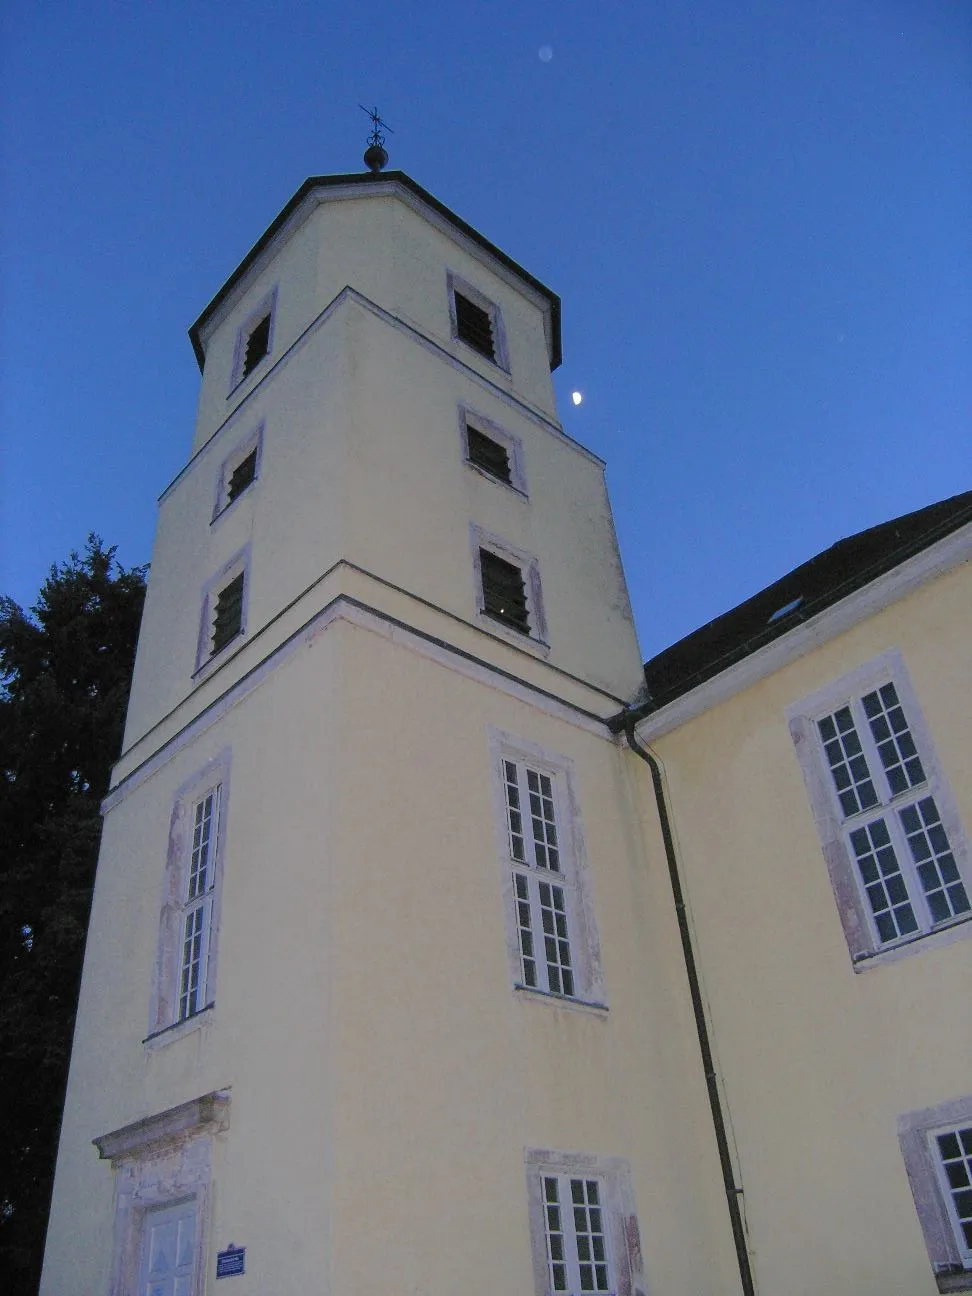 Photo showing: St. Nicholas' Church in Rüppurr, Karlsruhe, Germany